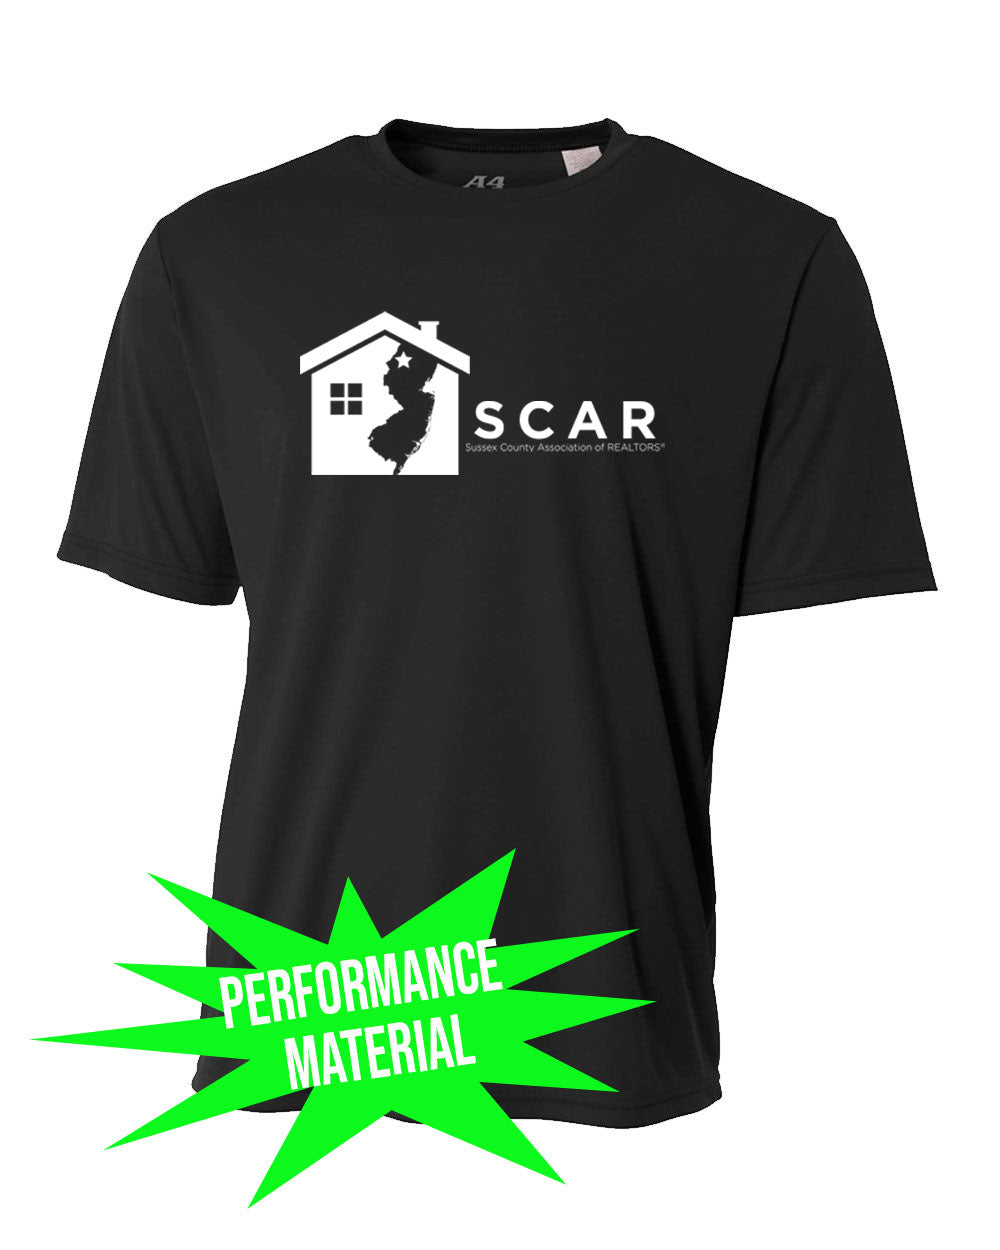 SCAR Performance material design 2 T-Shirt